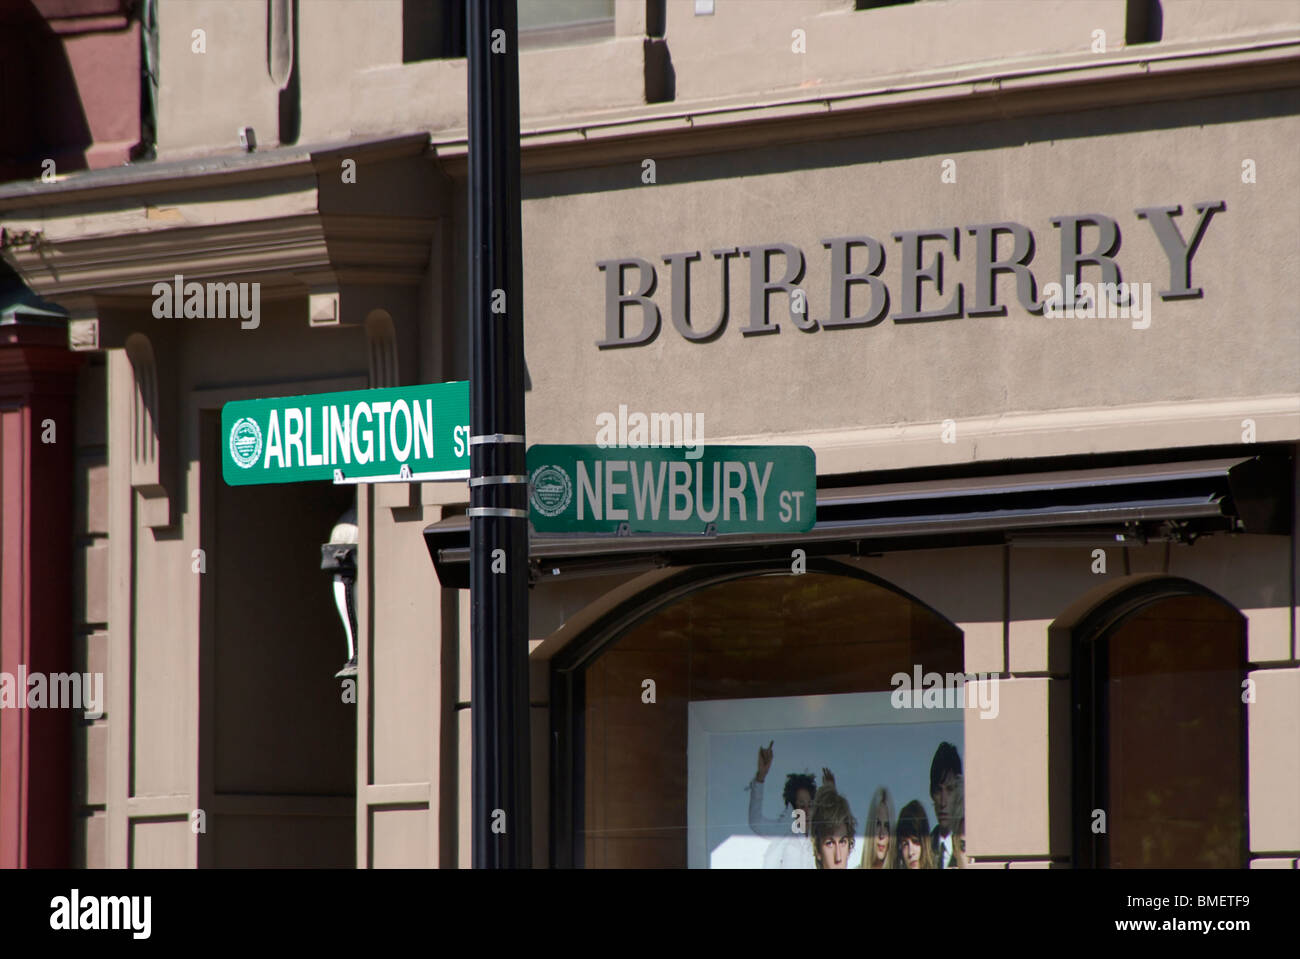 arlington and newbury street signs in bostons back bay Stock Photo - Alamy